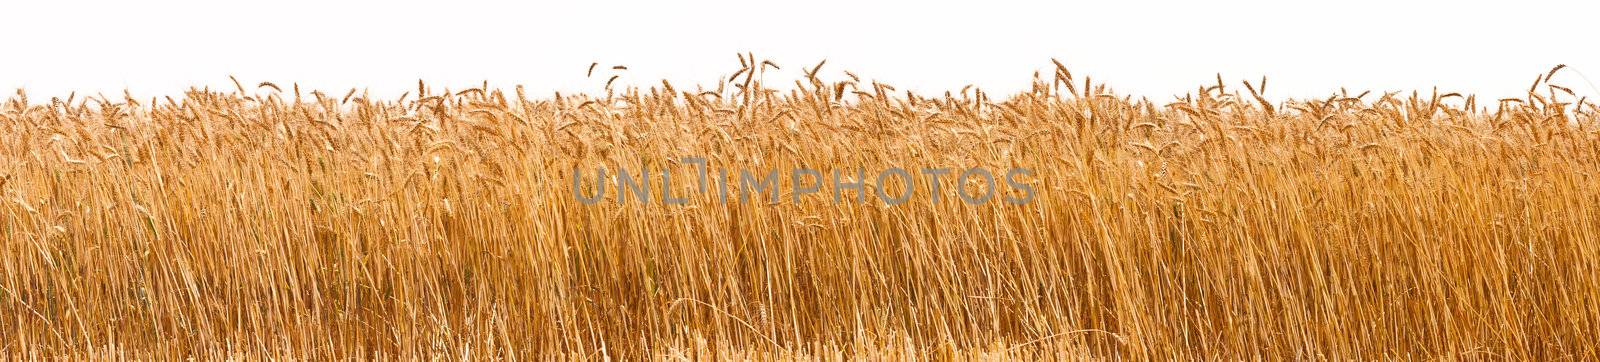 Panorama of a wheat crop by Jaykayl